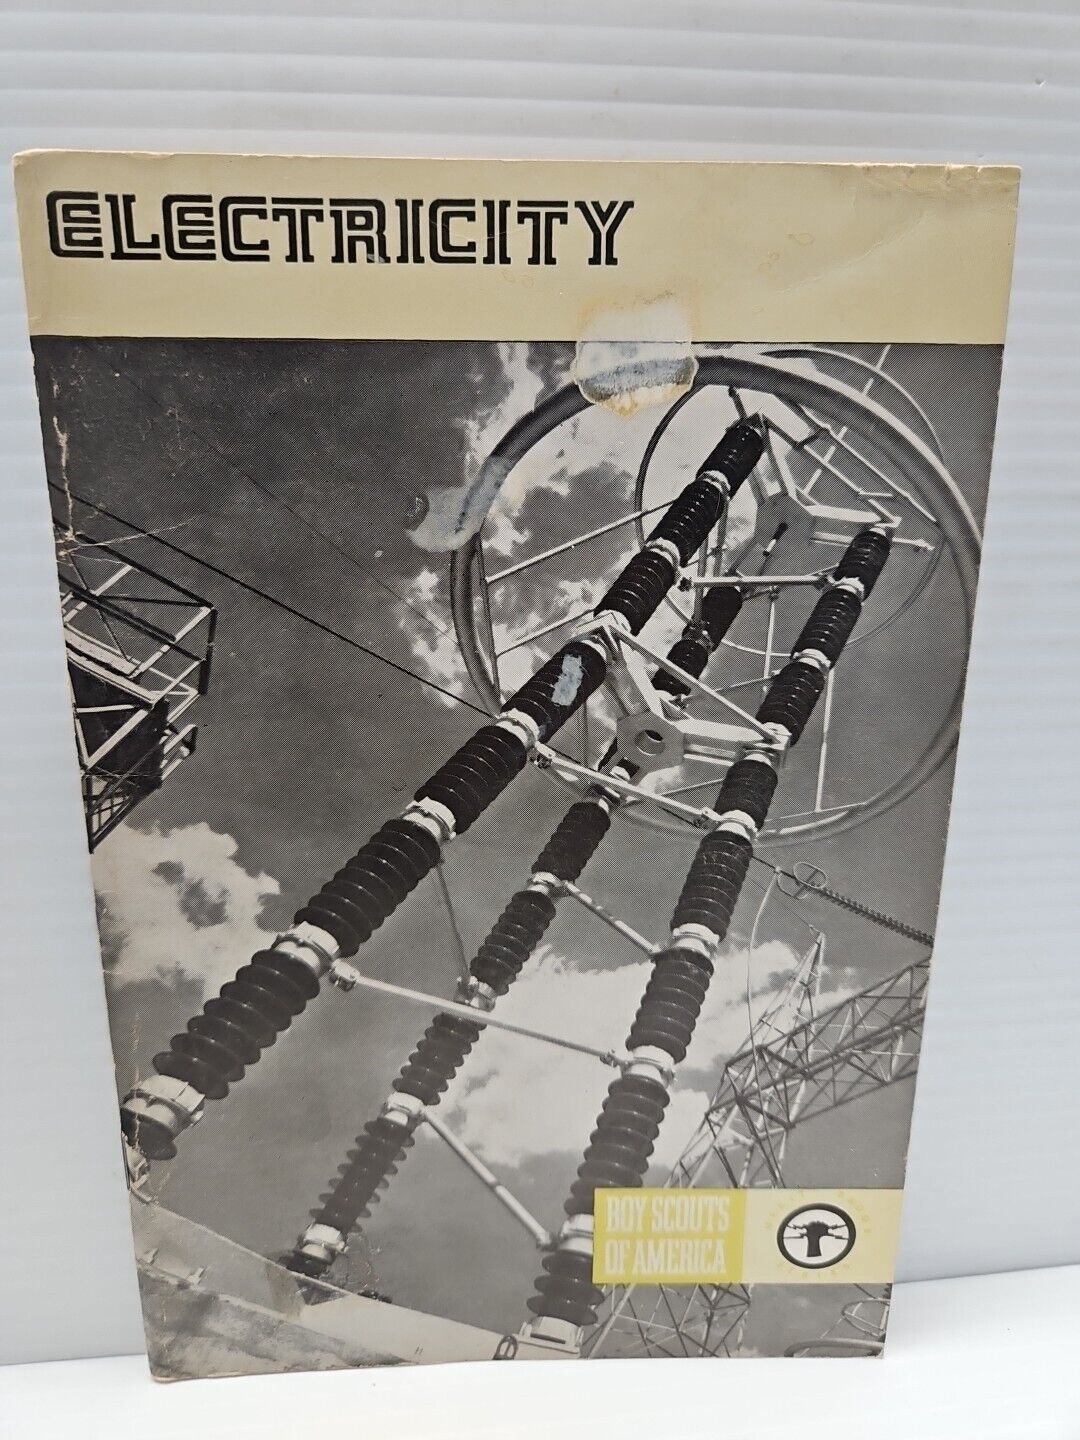 1974 VINTAGE BOY SCOUT MERIT BADGE BOOK - Electricity 1956 CR